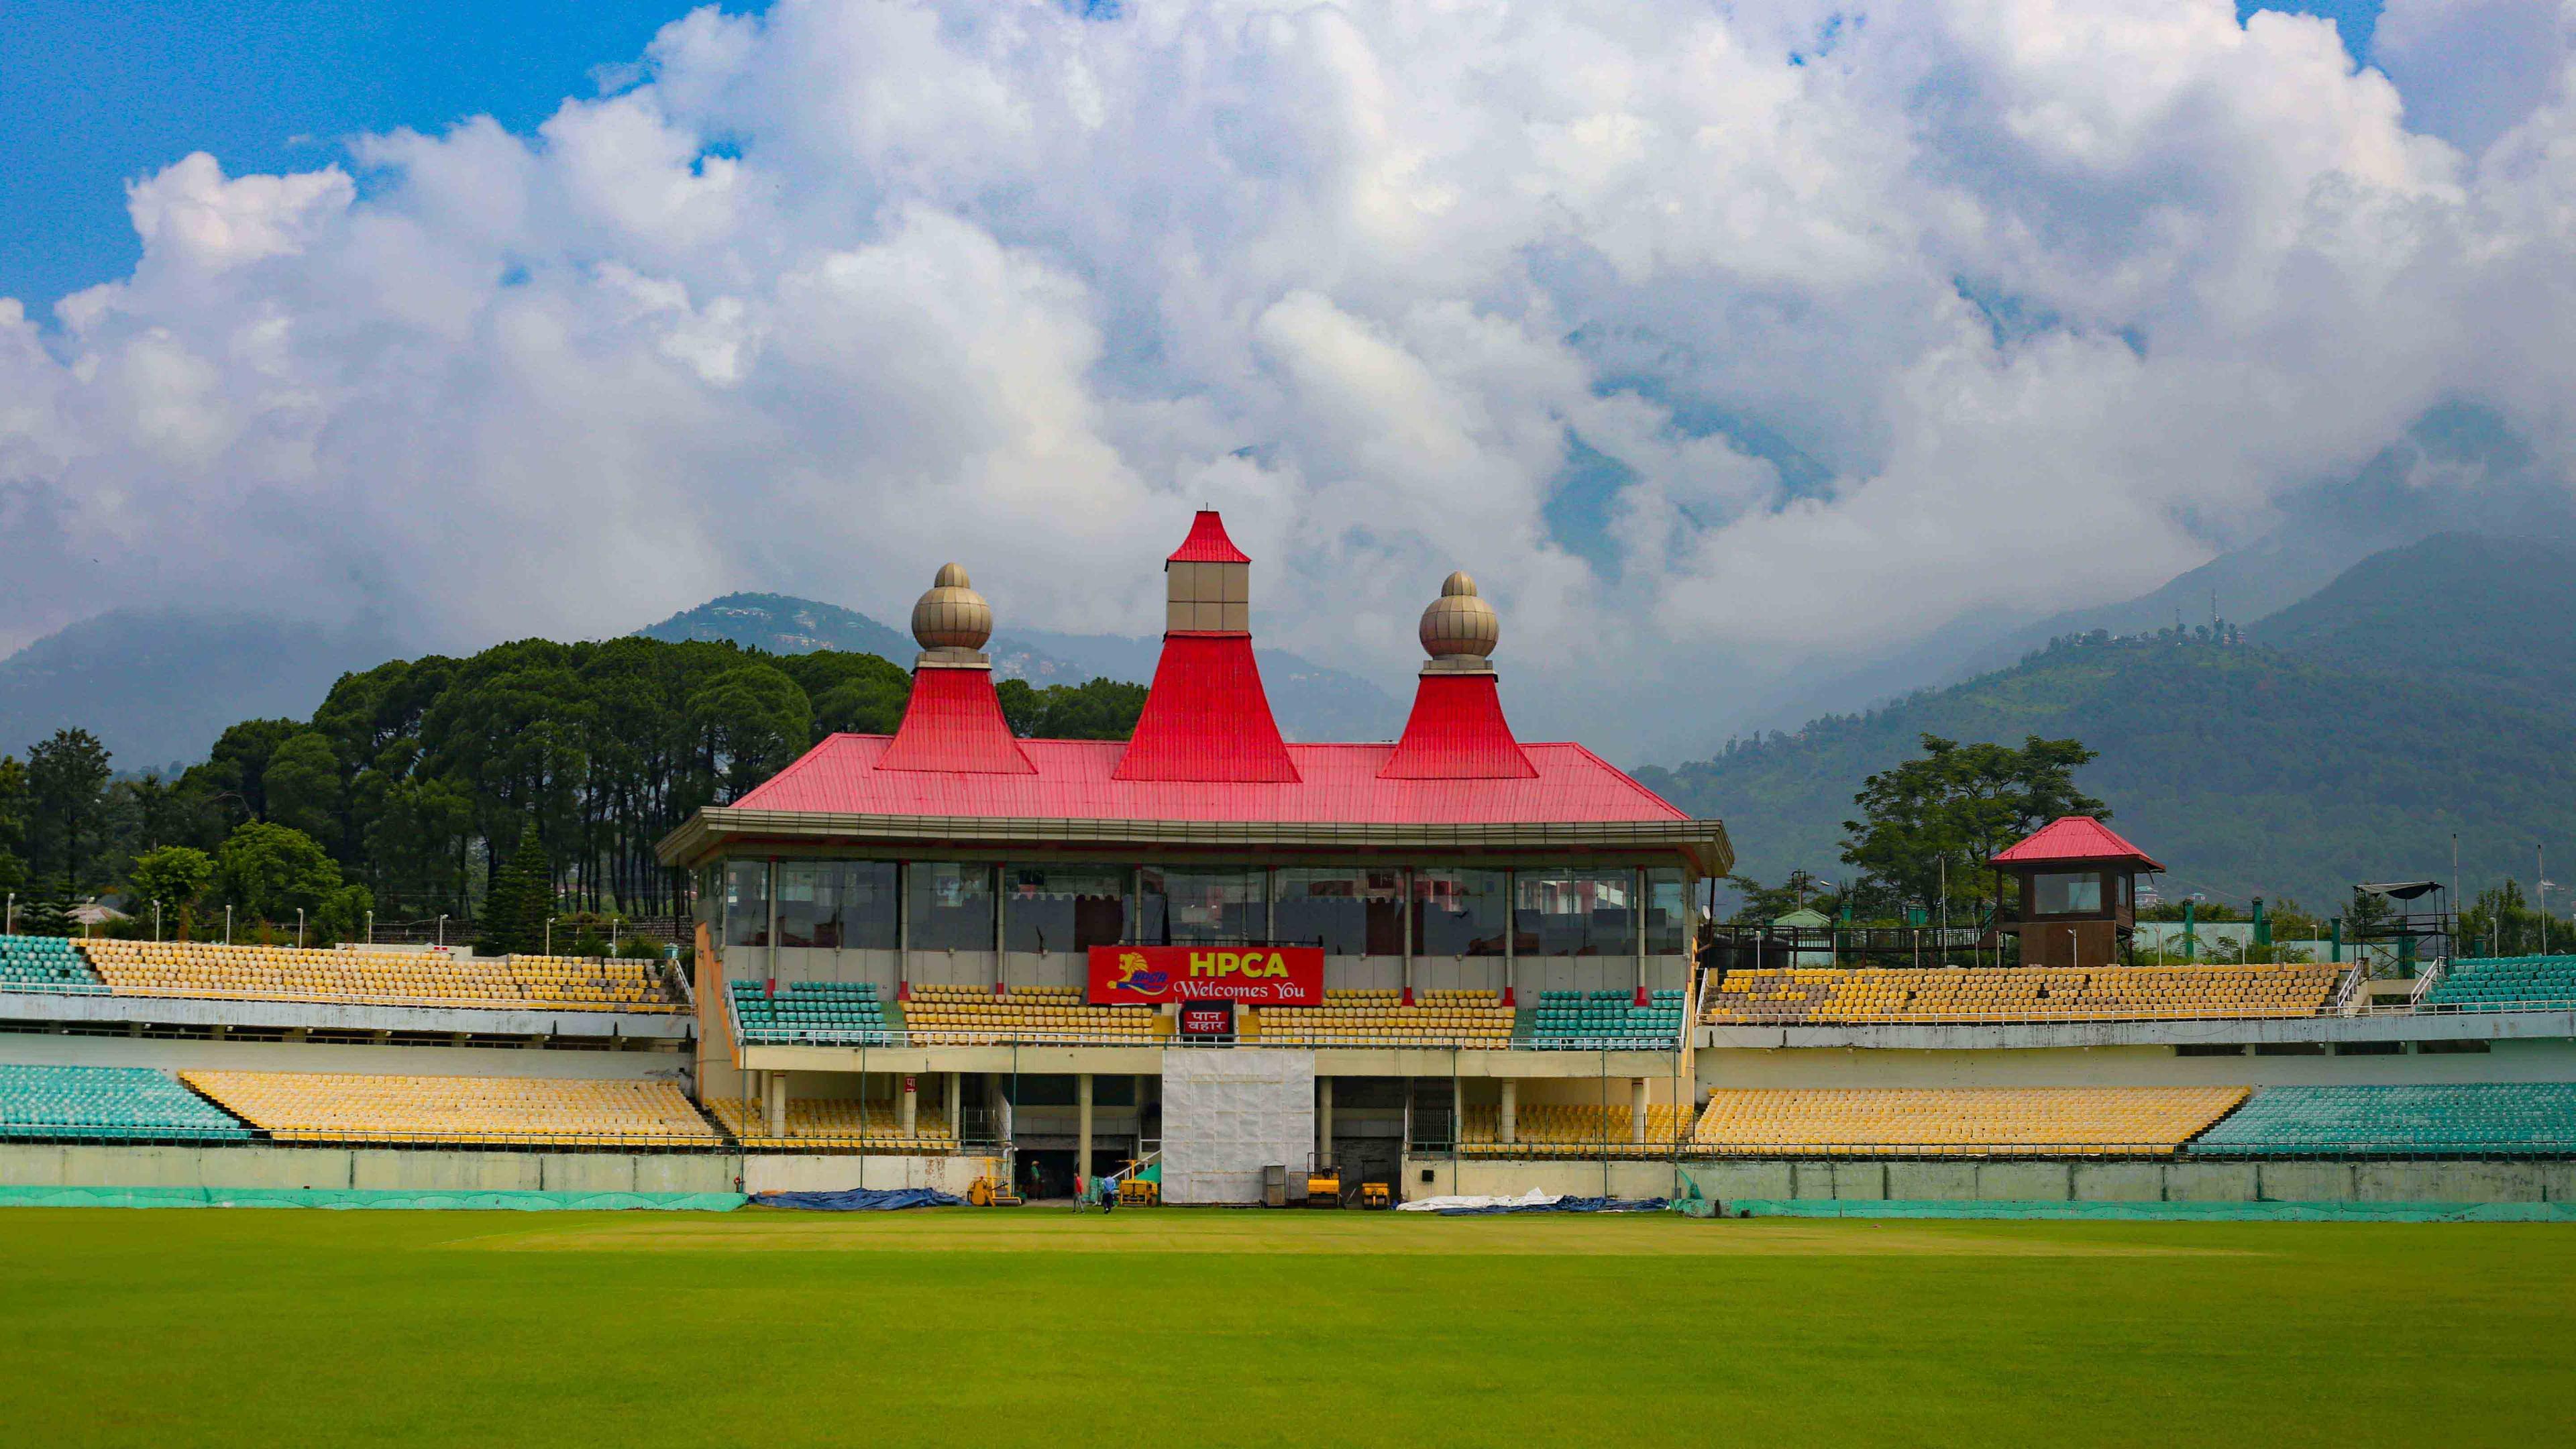 HPCA Cricket Stadium